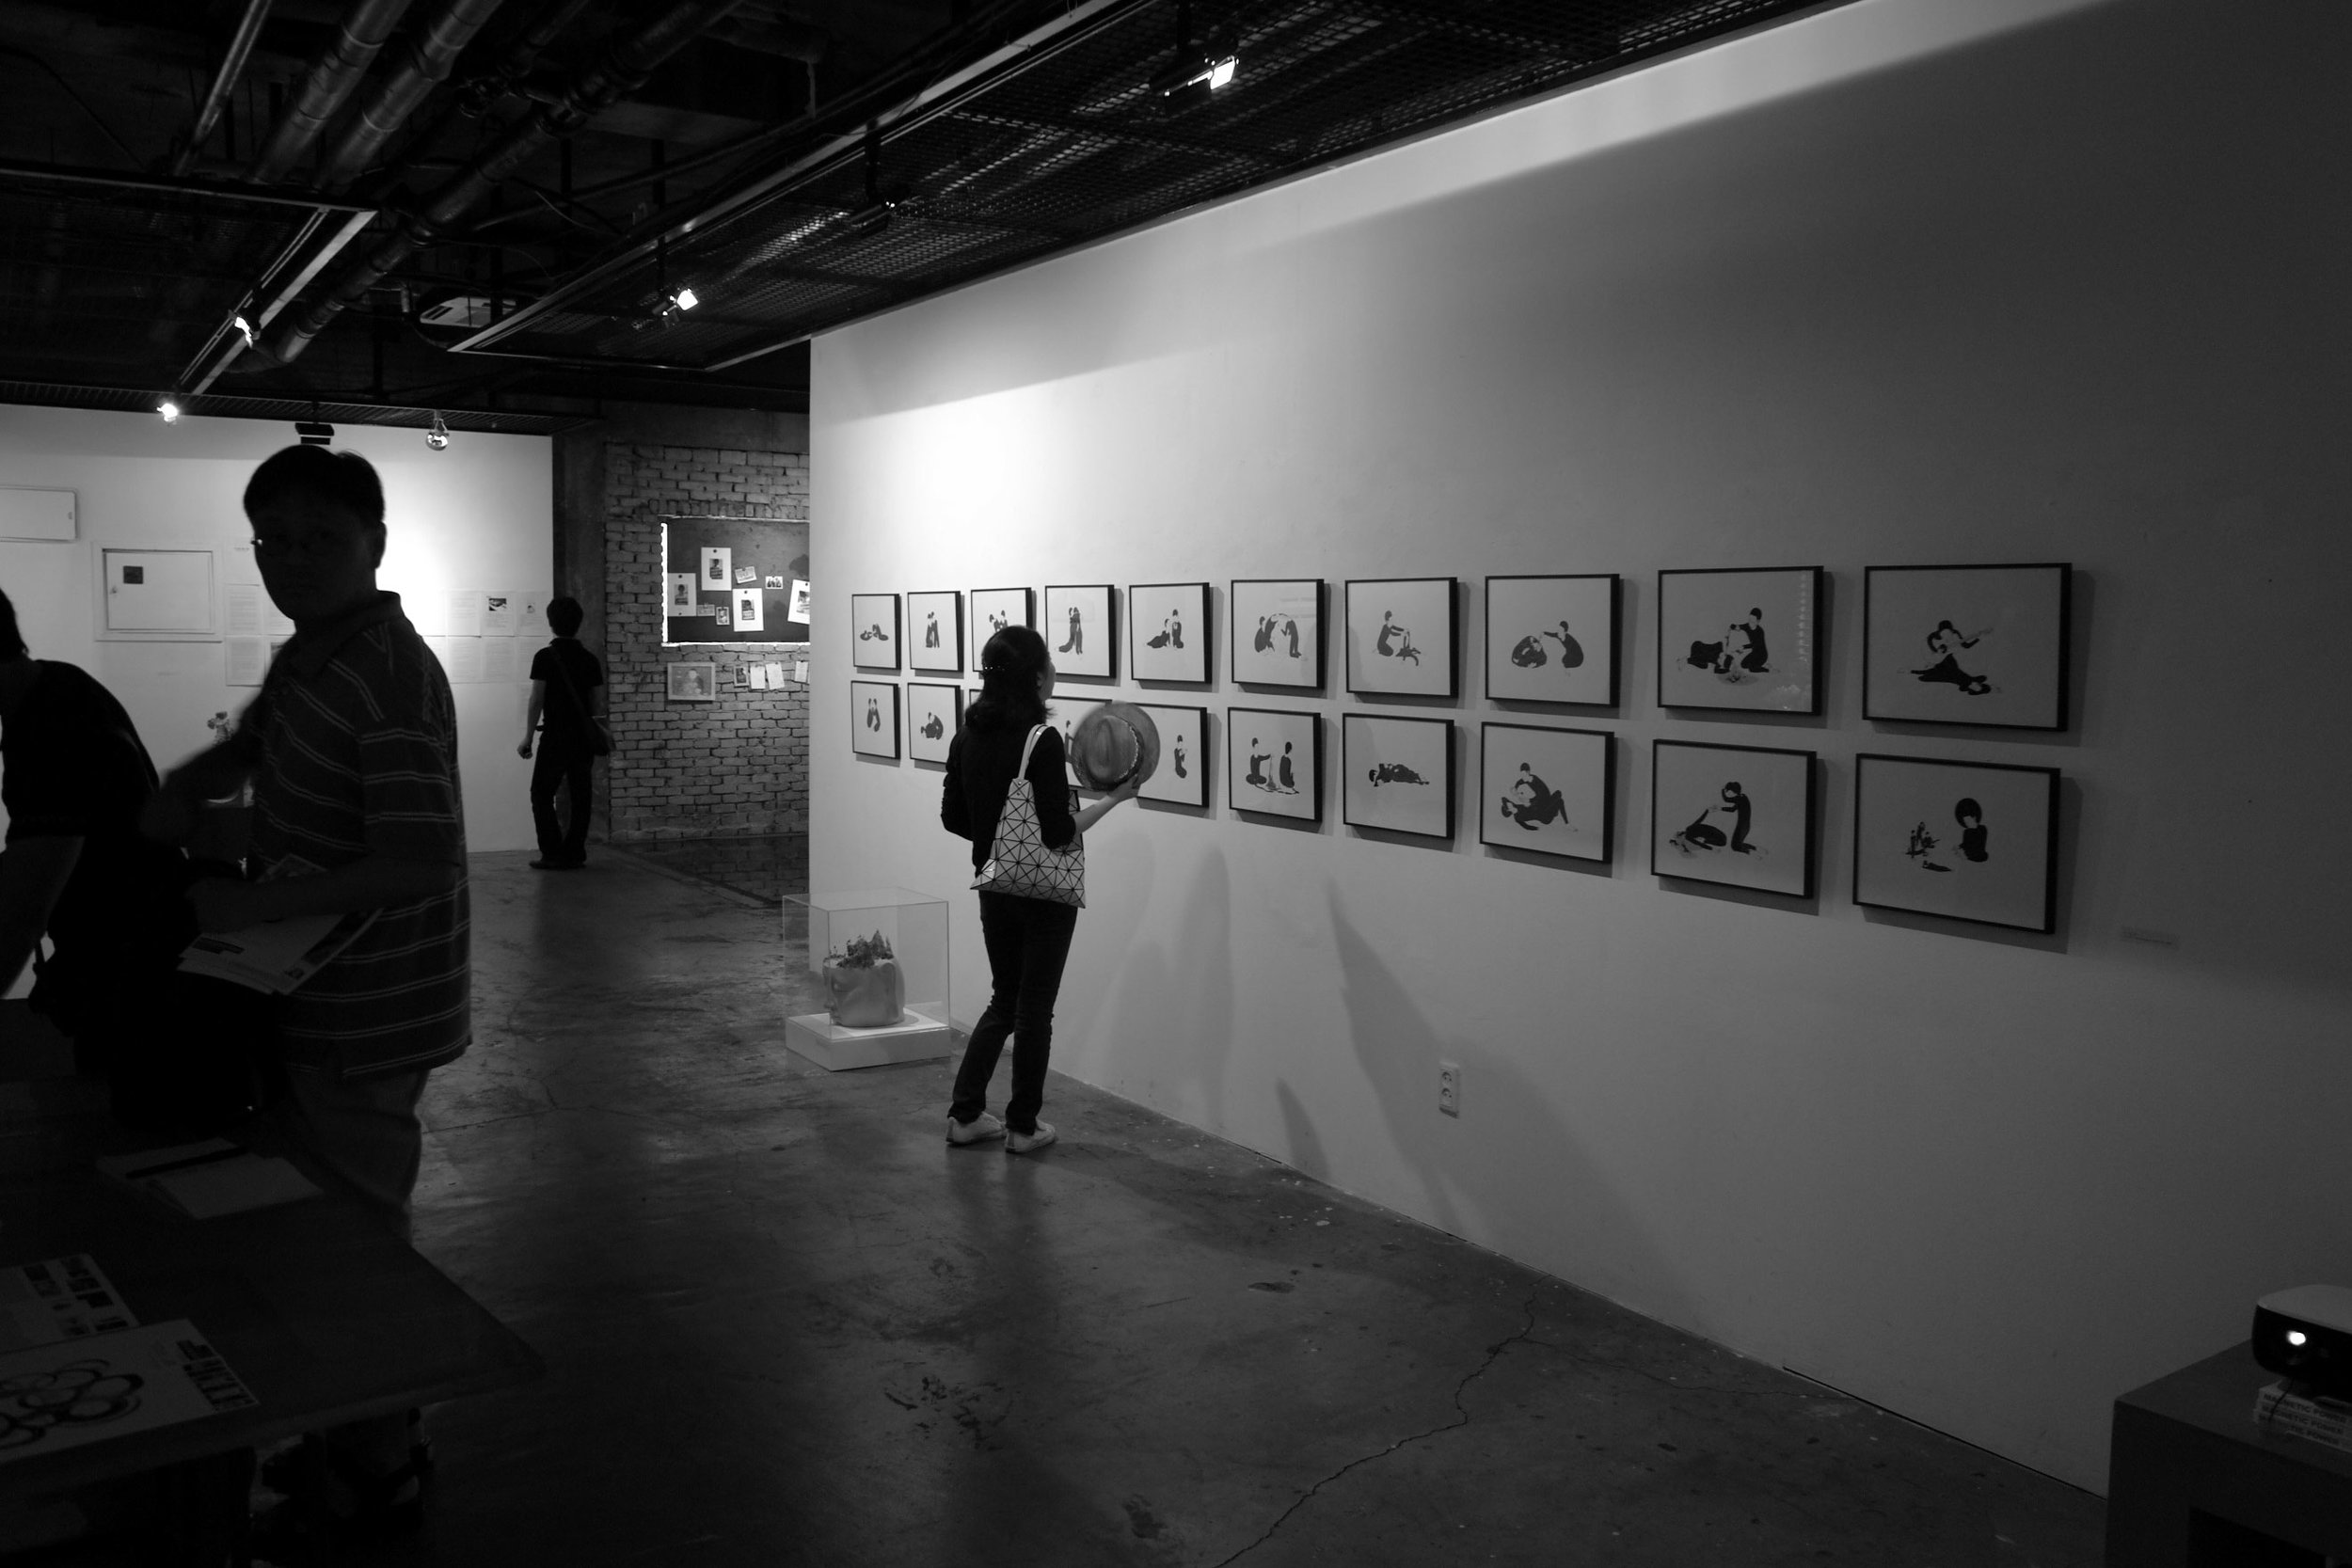 &lt;Conjunction - Artist of Media&gt;, JungMiSo Gallery, Seoul, South Korea, 2009